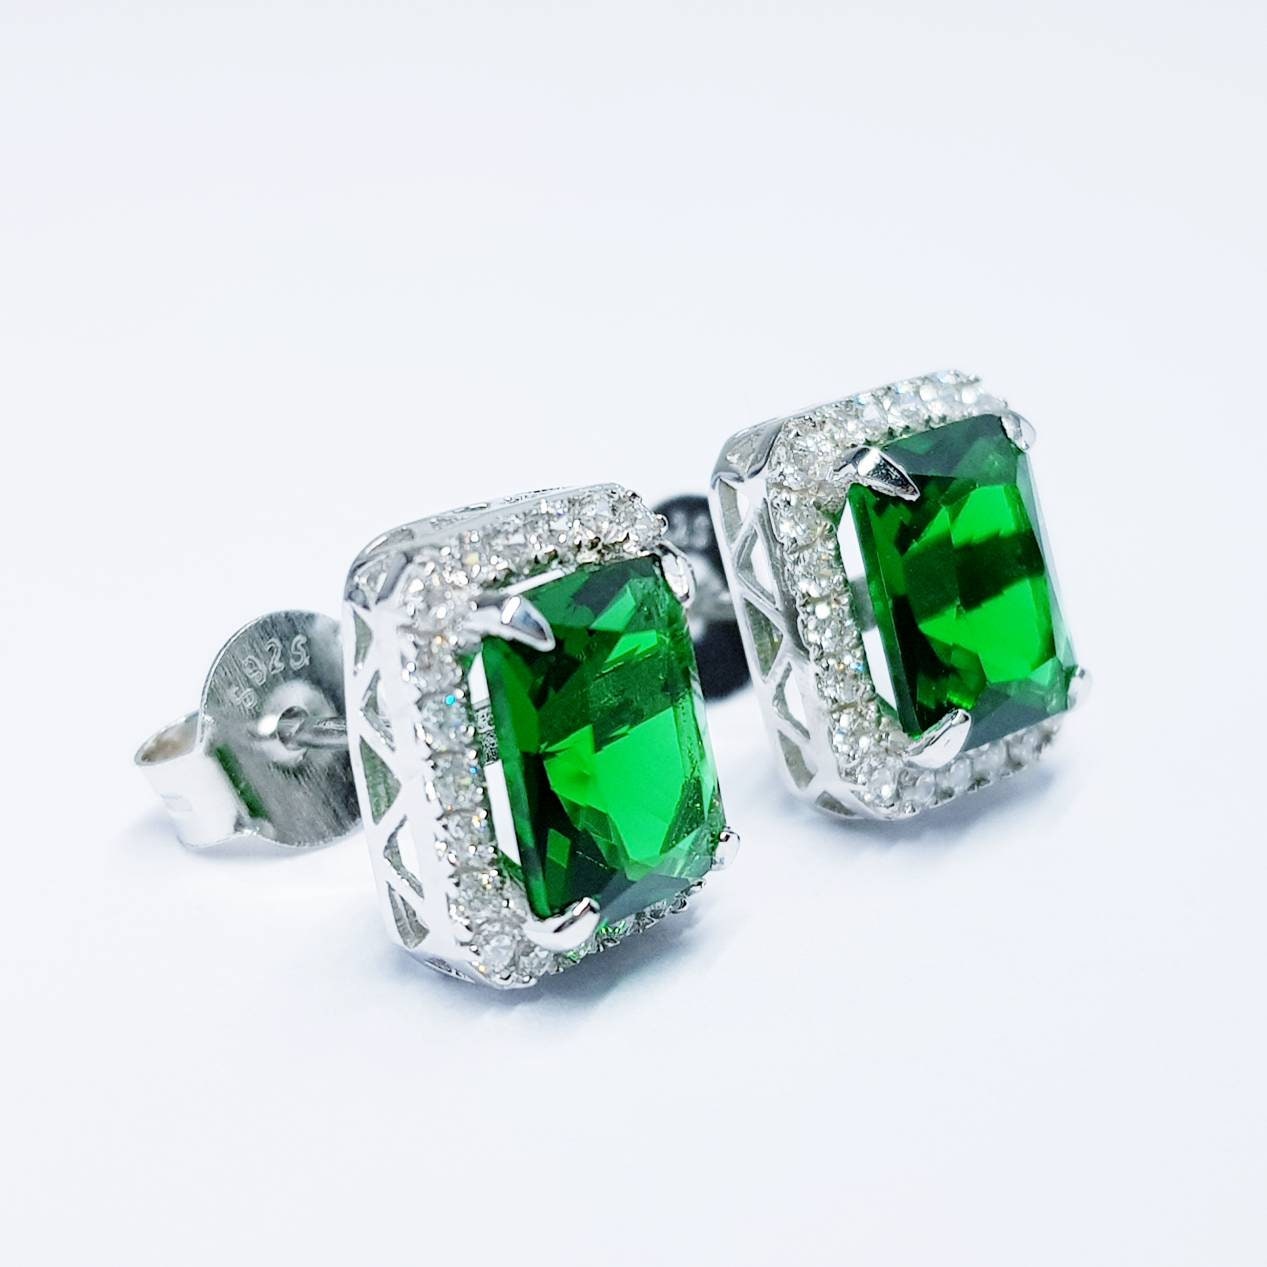 Emerald stud earrings, green earrings, green studs, diamond halo earrings, gifts for her, Green rectangular earrings